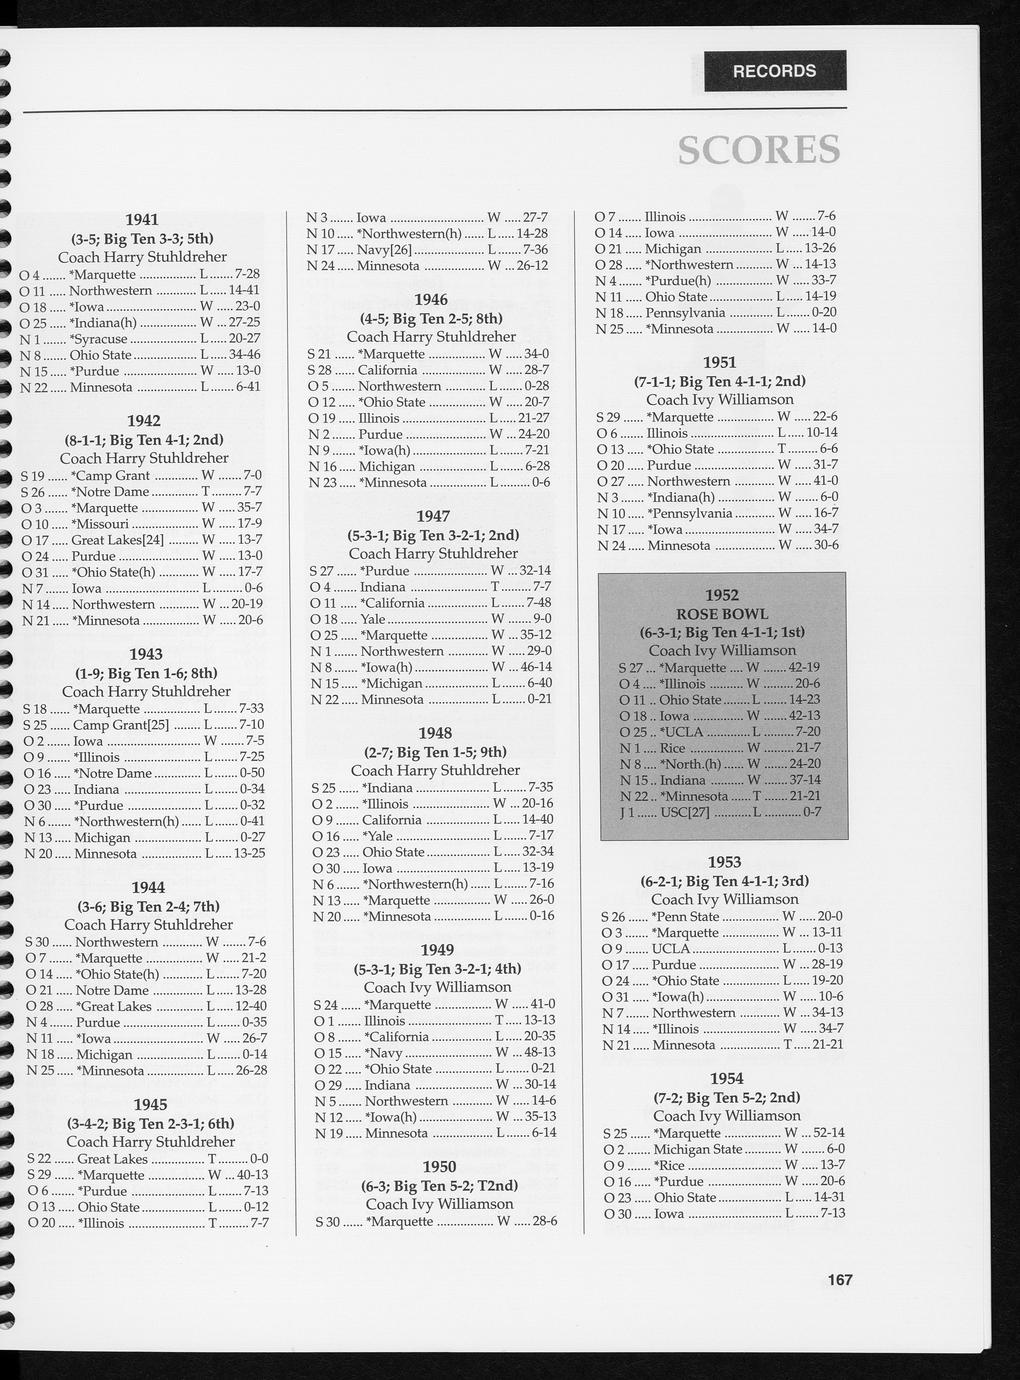 Wisconsin football guide 1994 Full view UWDC UWMadison Libraries